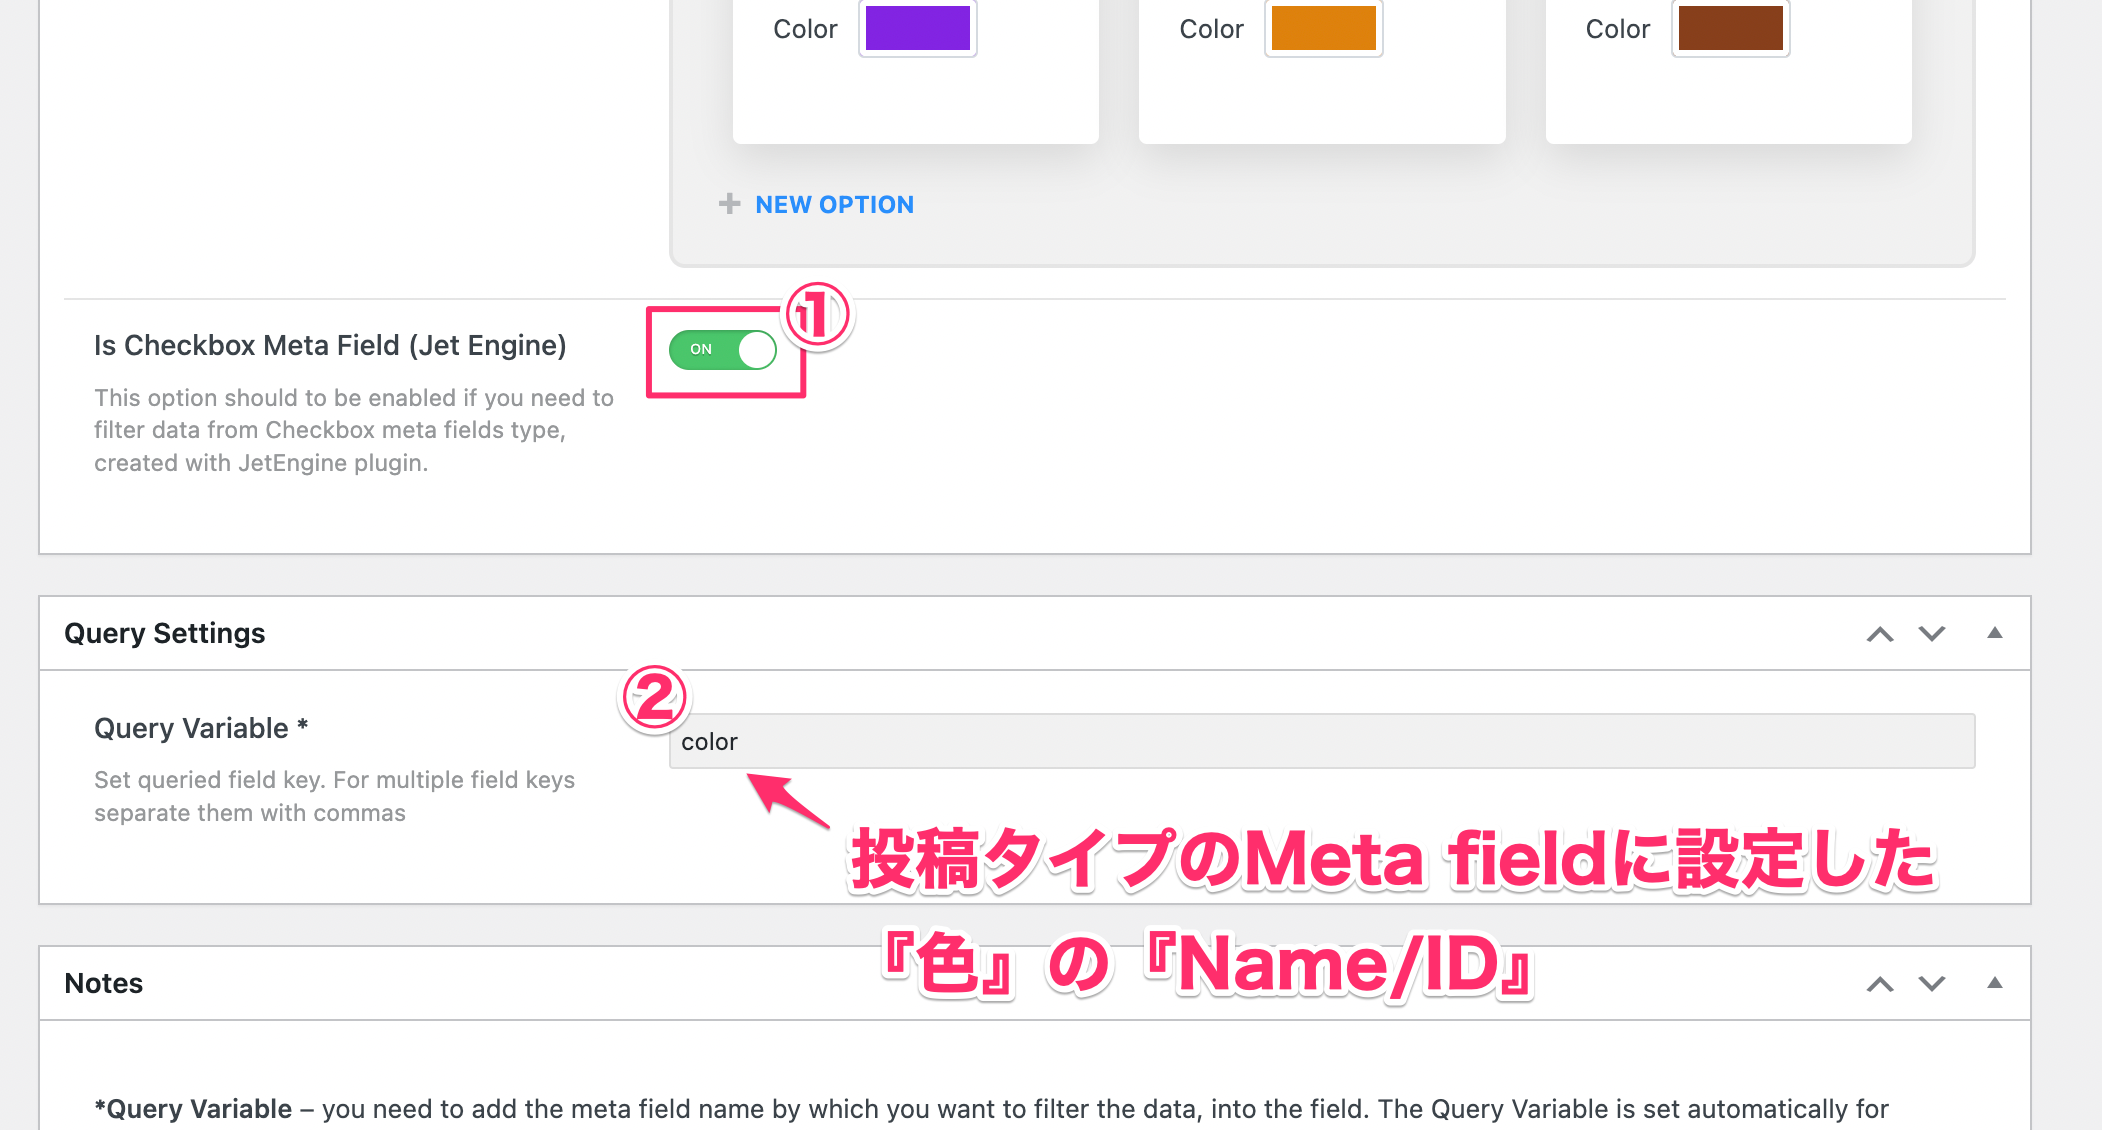 『Is Checkbox Meta Field(JetEngine）』と『Query Variable』の設定